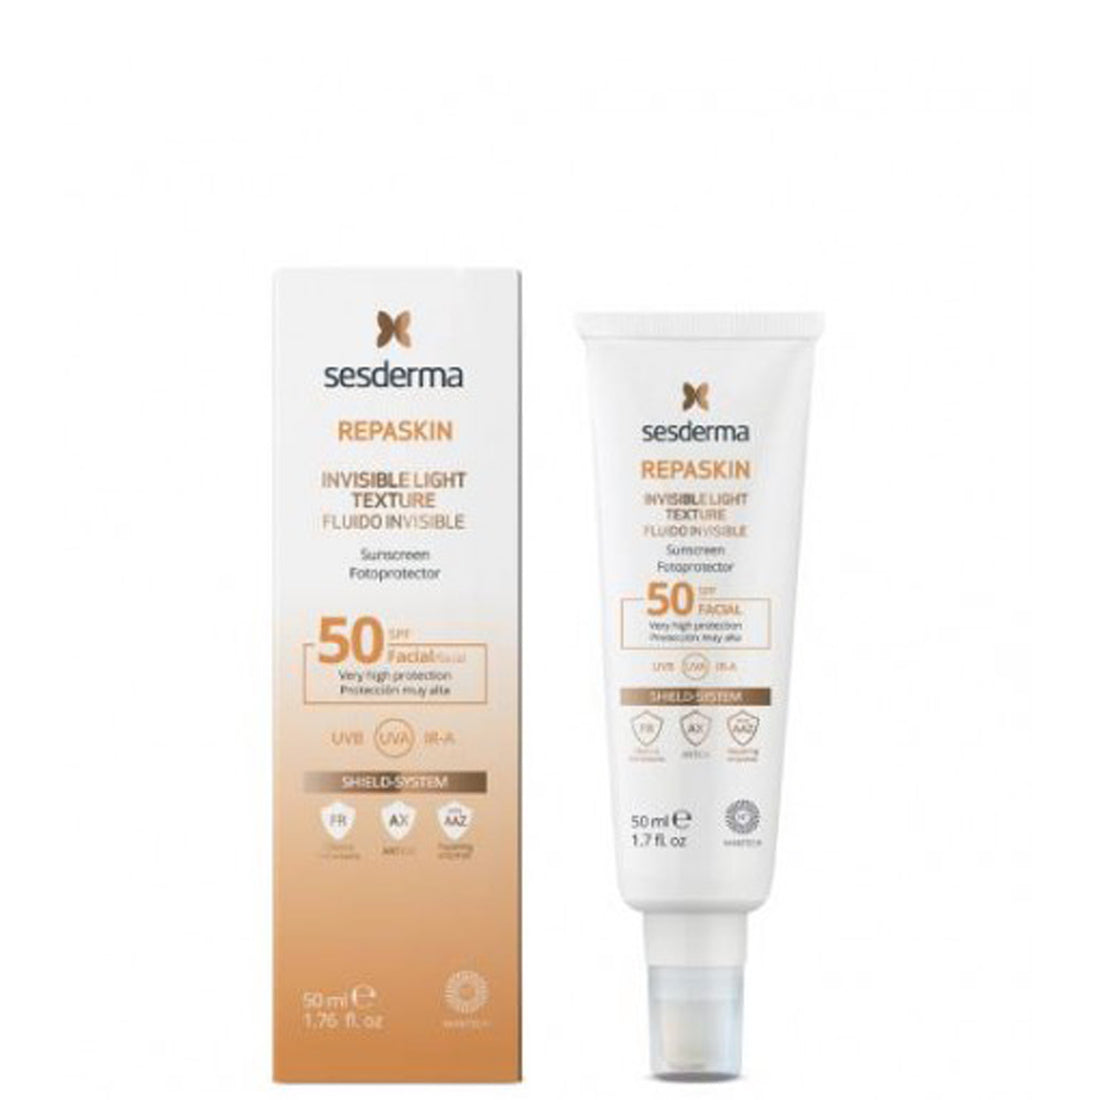 Sesderma Repaskin Invisible Light Texture Facial Sunscreen SPF50 50ml (1.69fl oz)